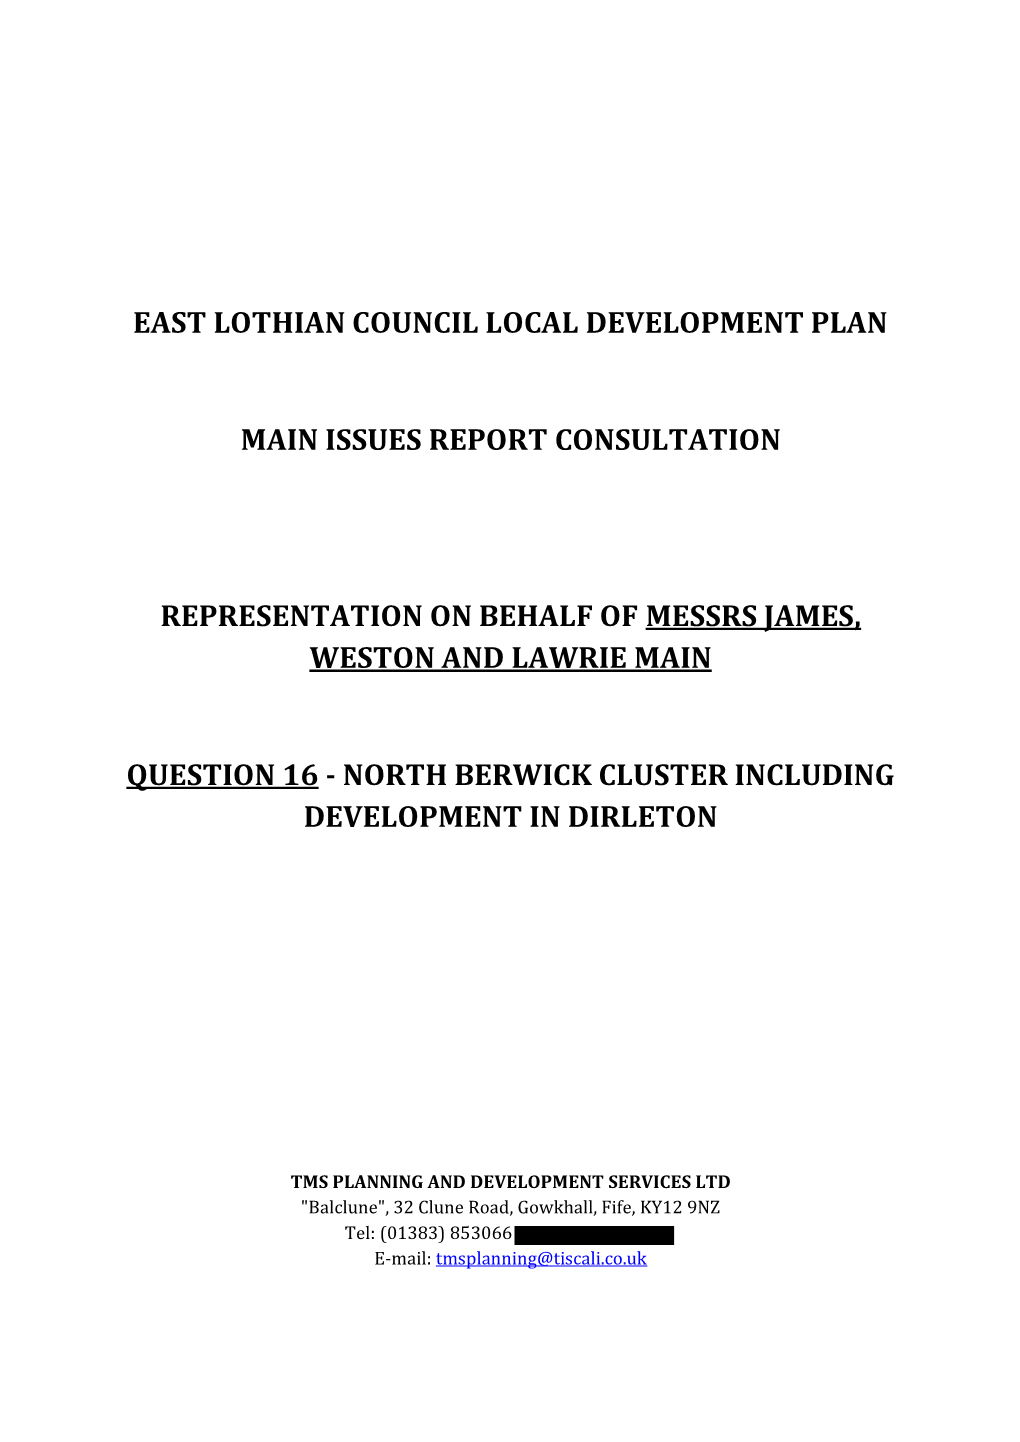 East Lothian Council Local Development Plan Main